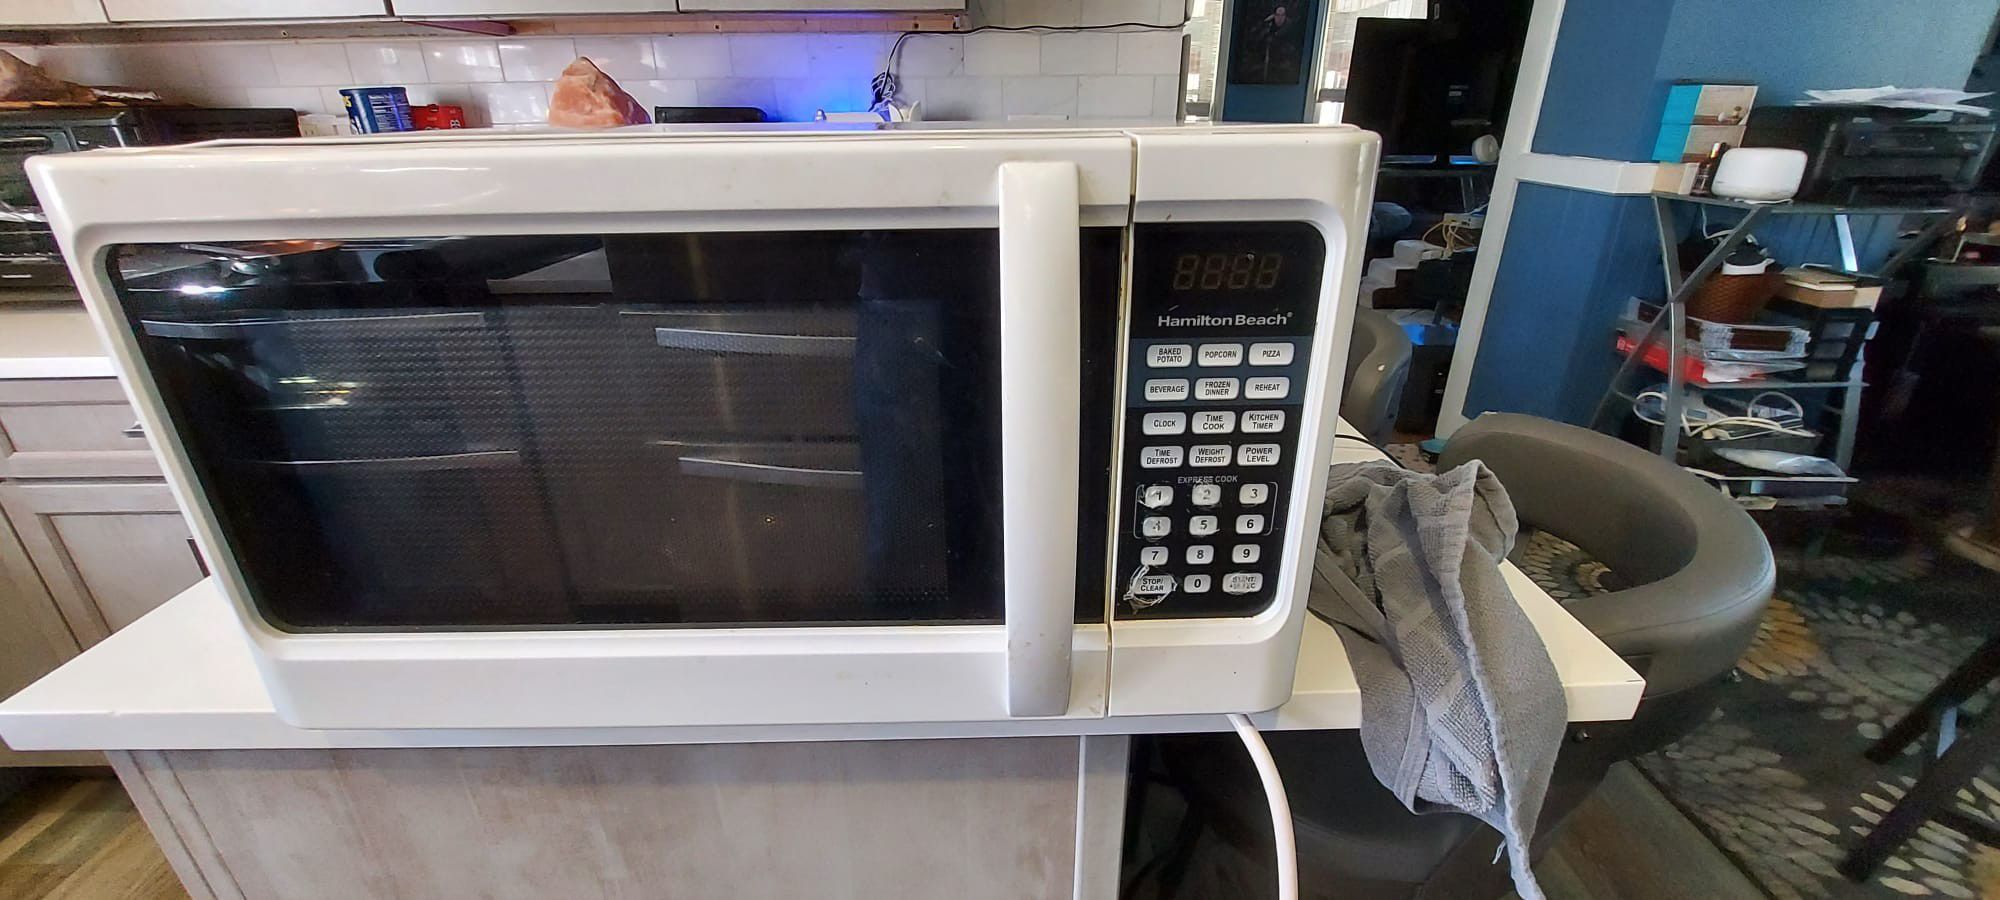 Hamilton Microwave 1000w With Turntable 